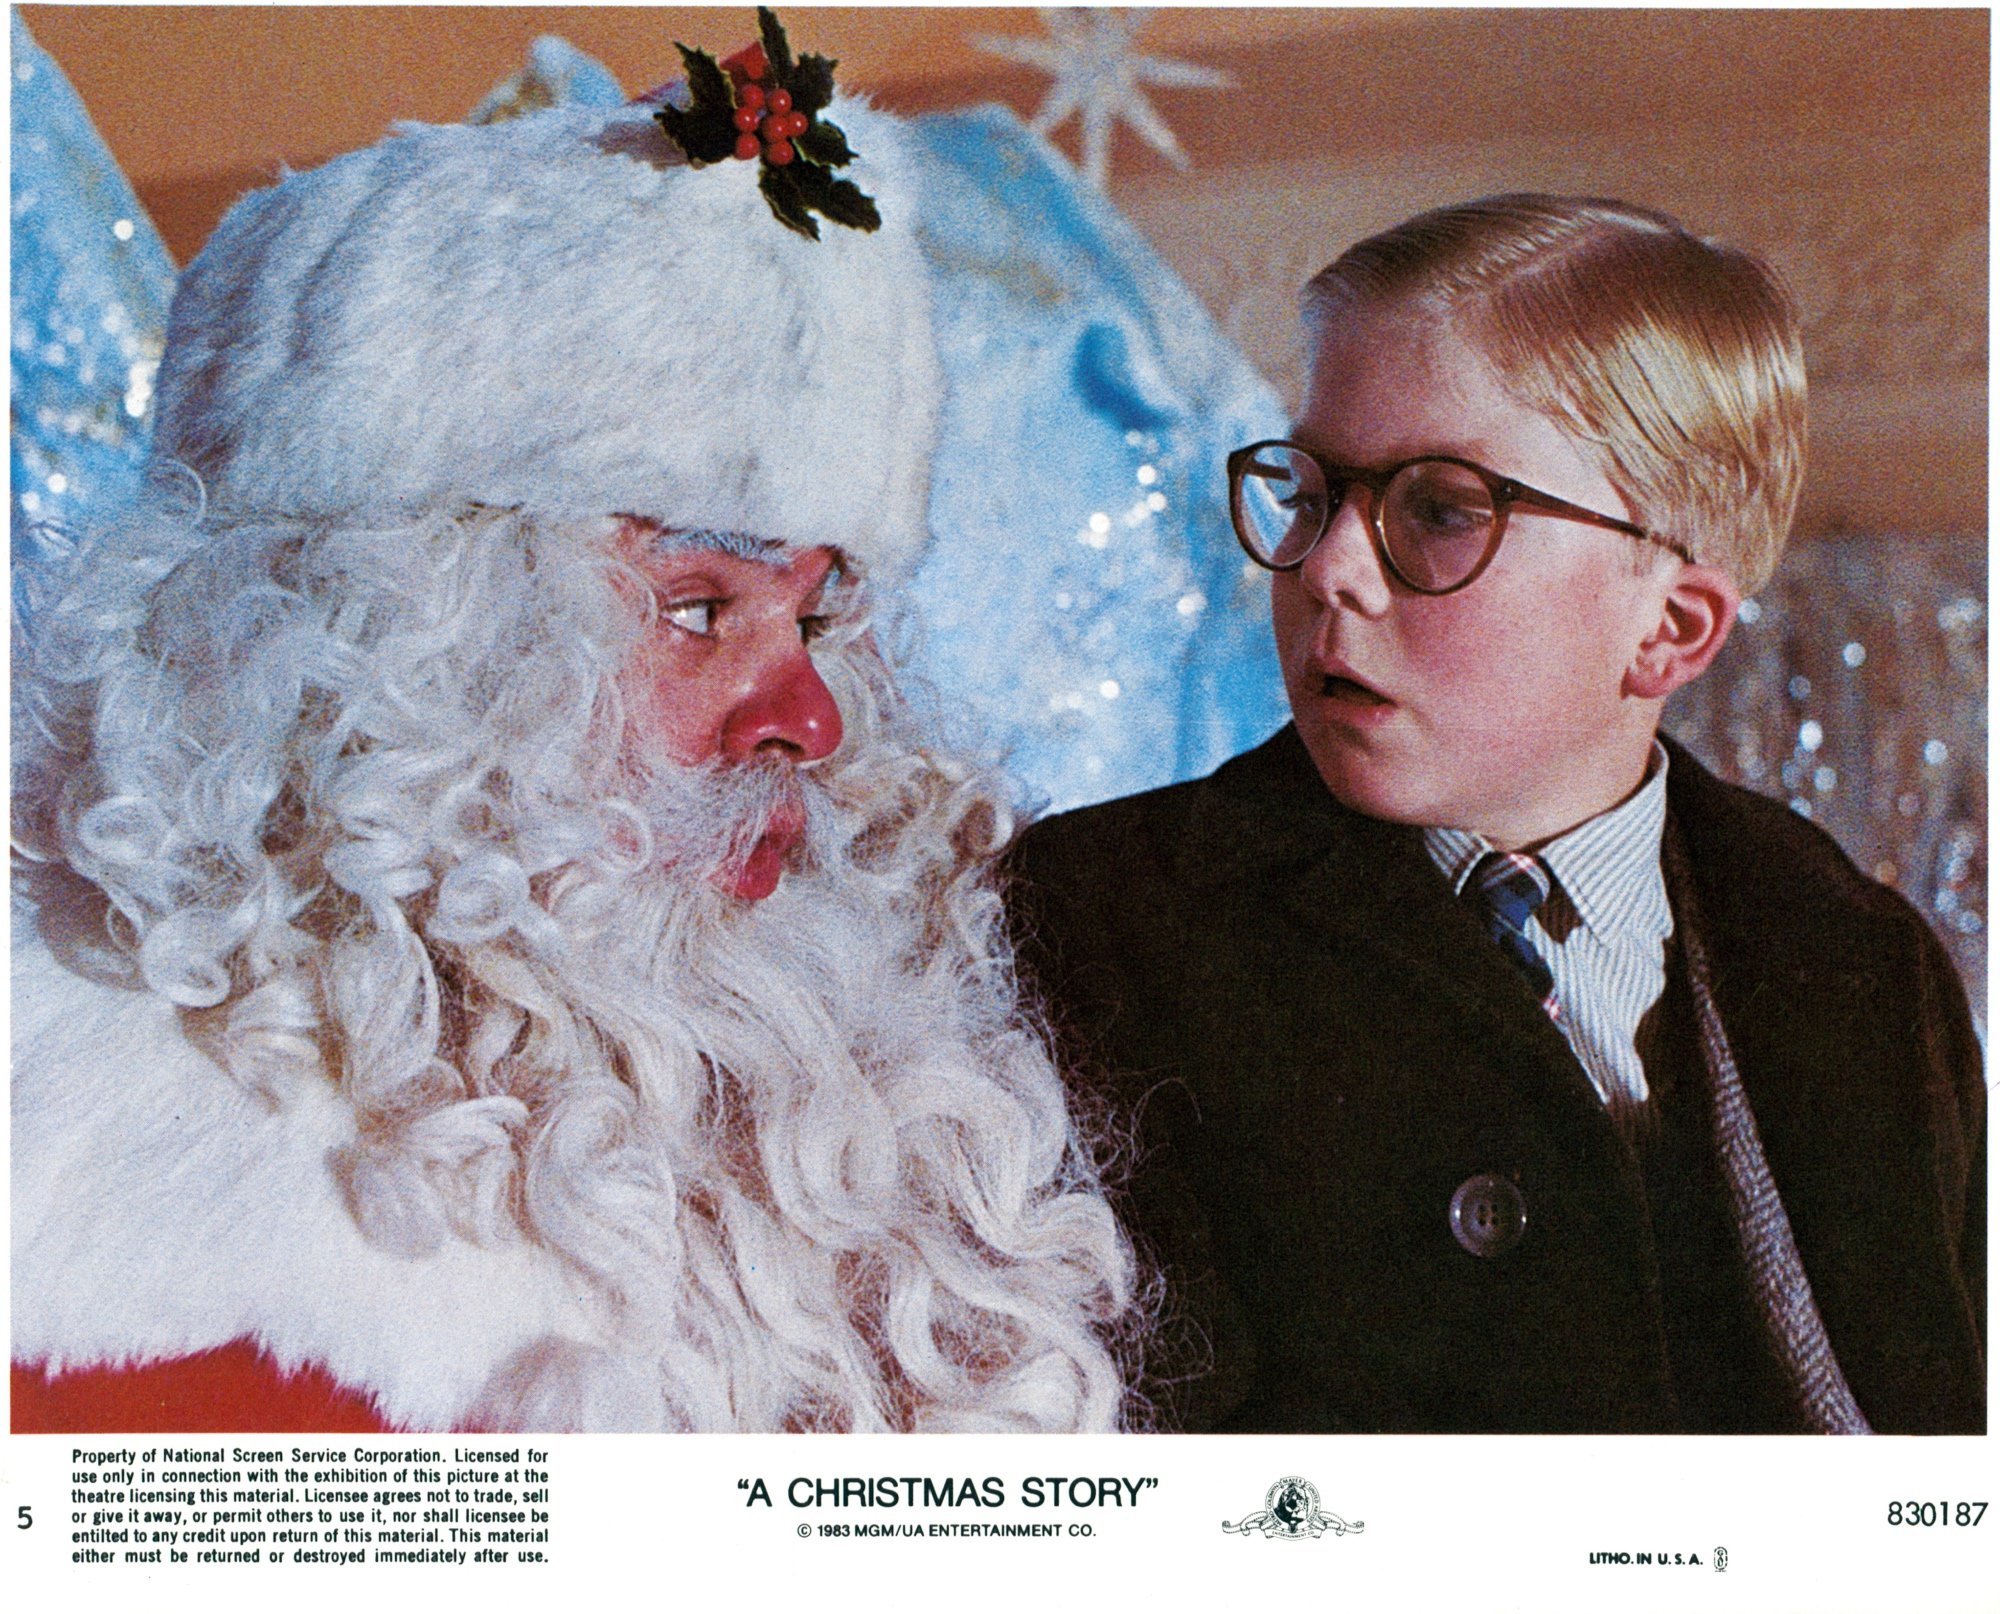 'A Christmas Story' star Peter Billingsley as Ralphie Parker sitting on Santa's lap